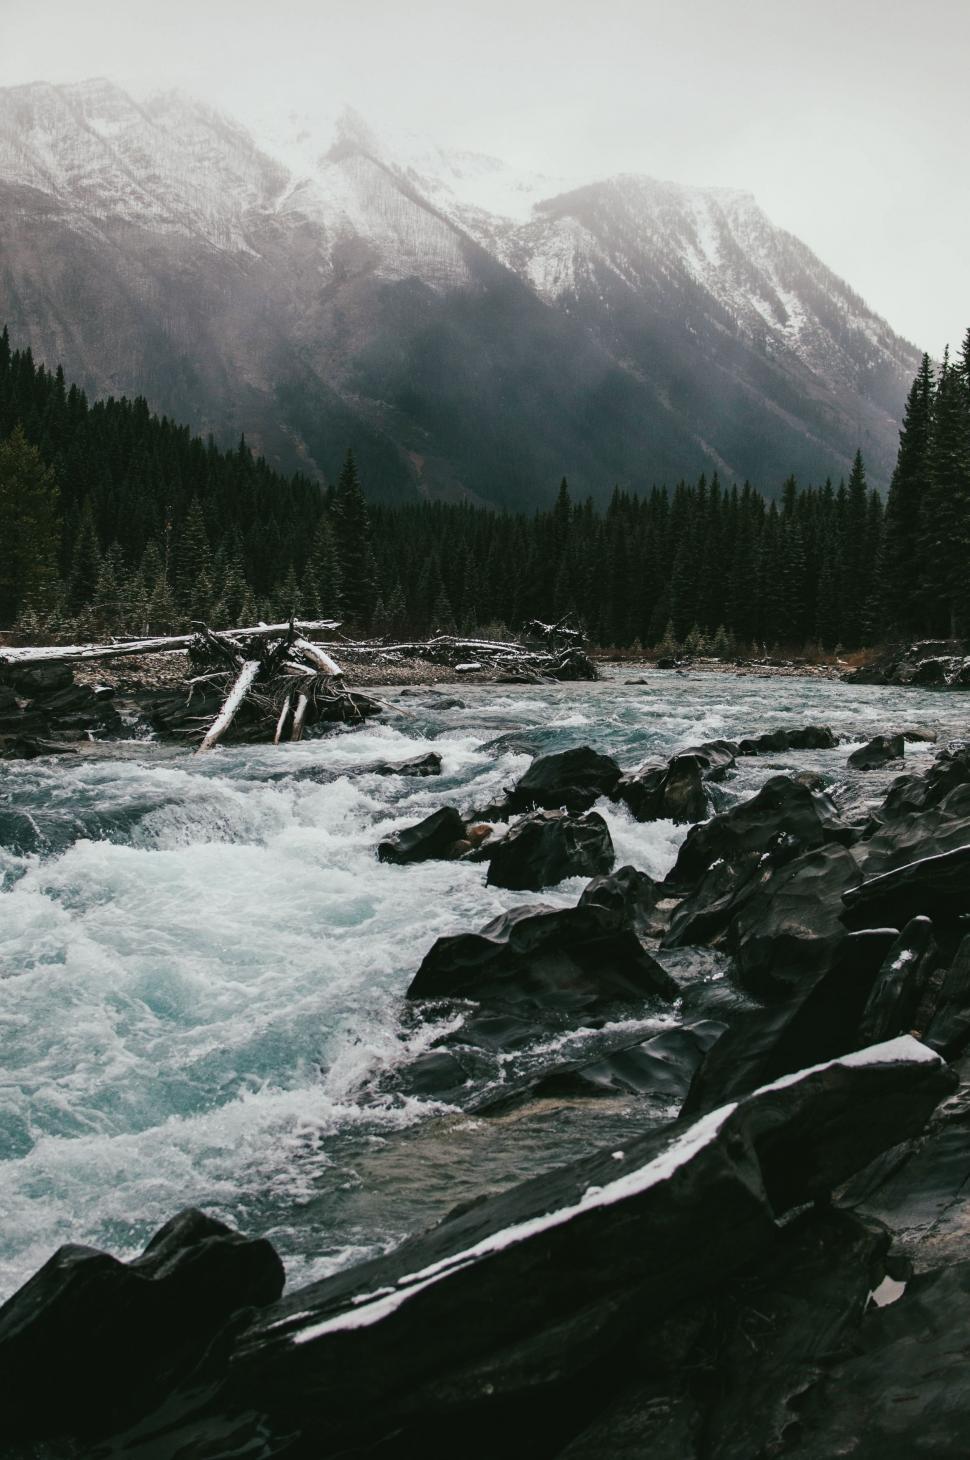 Free Image of River Flowing Through Mountainous Landscape 